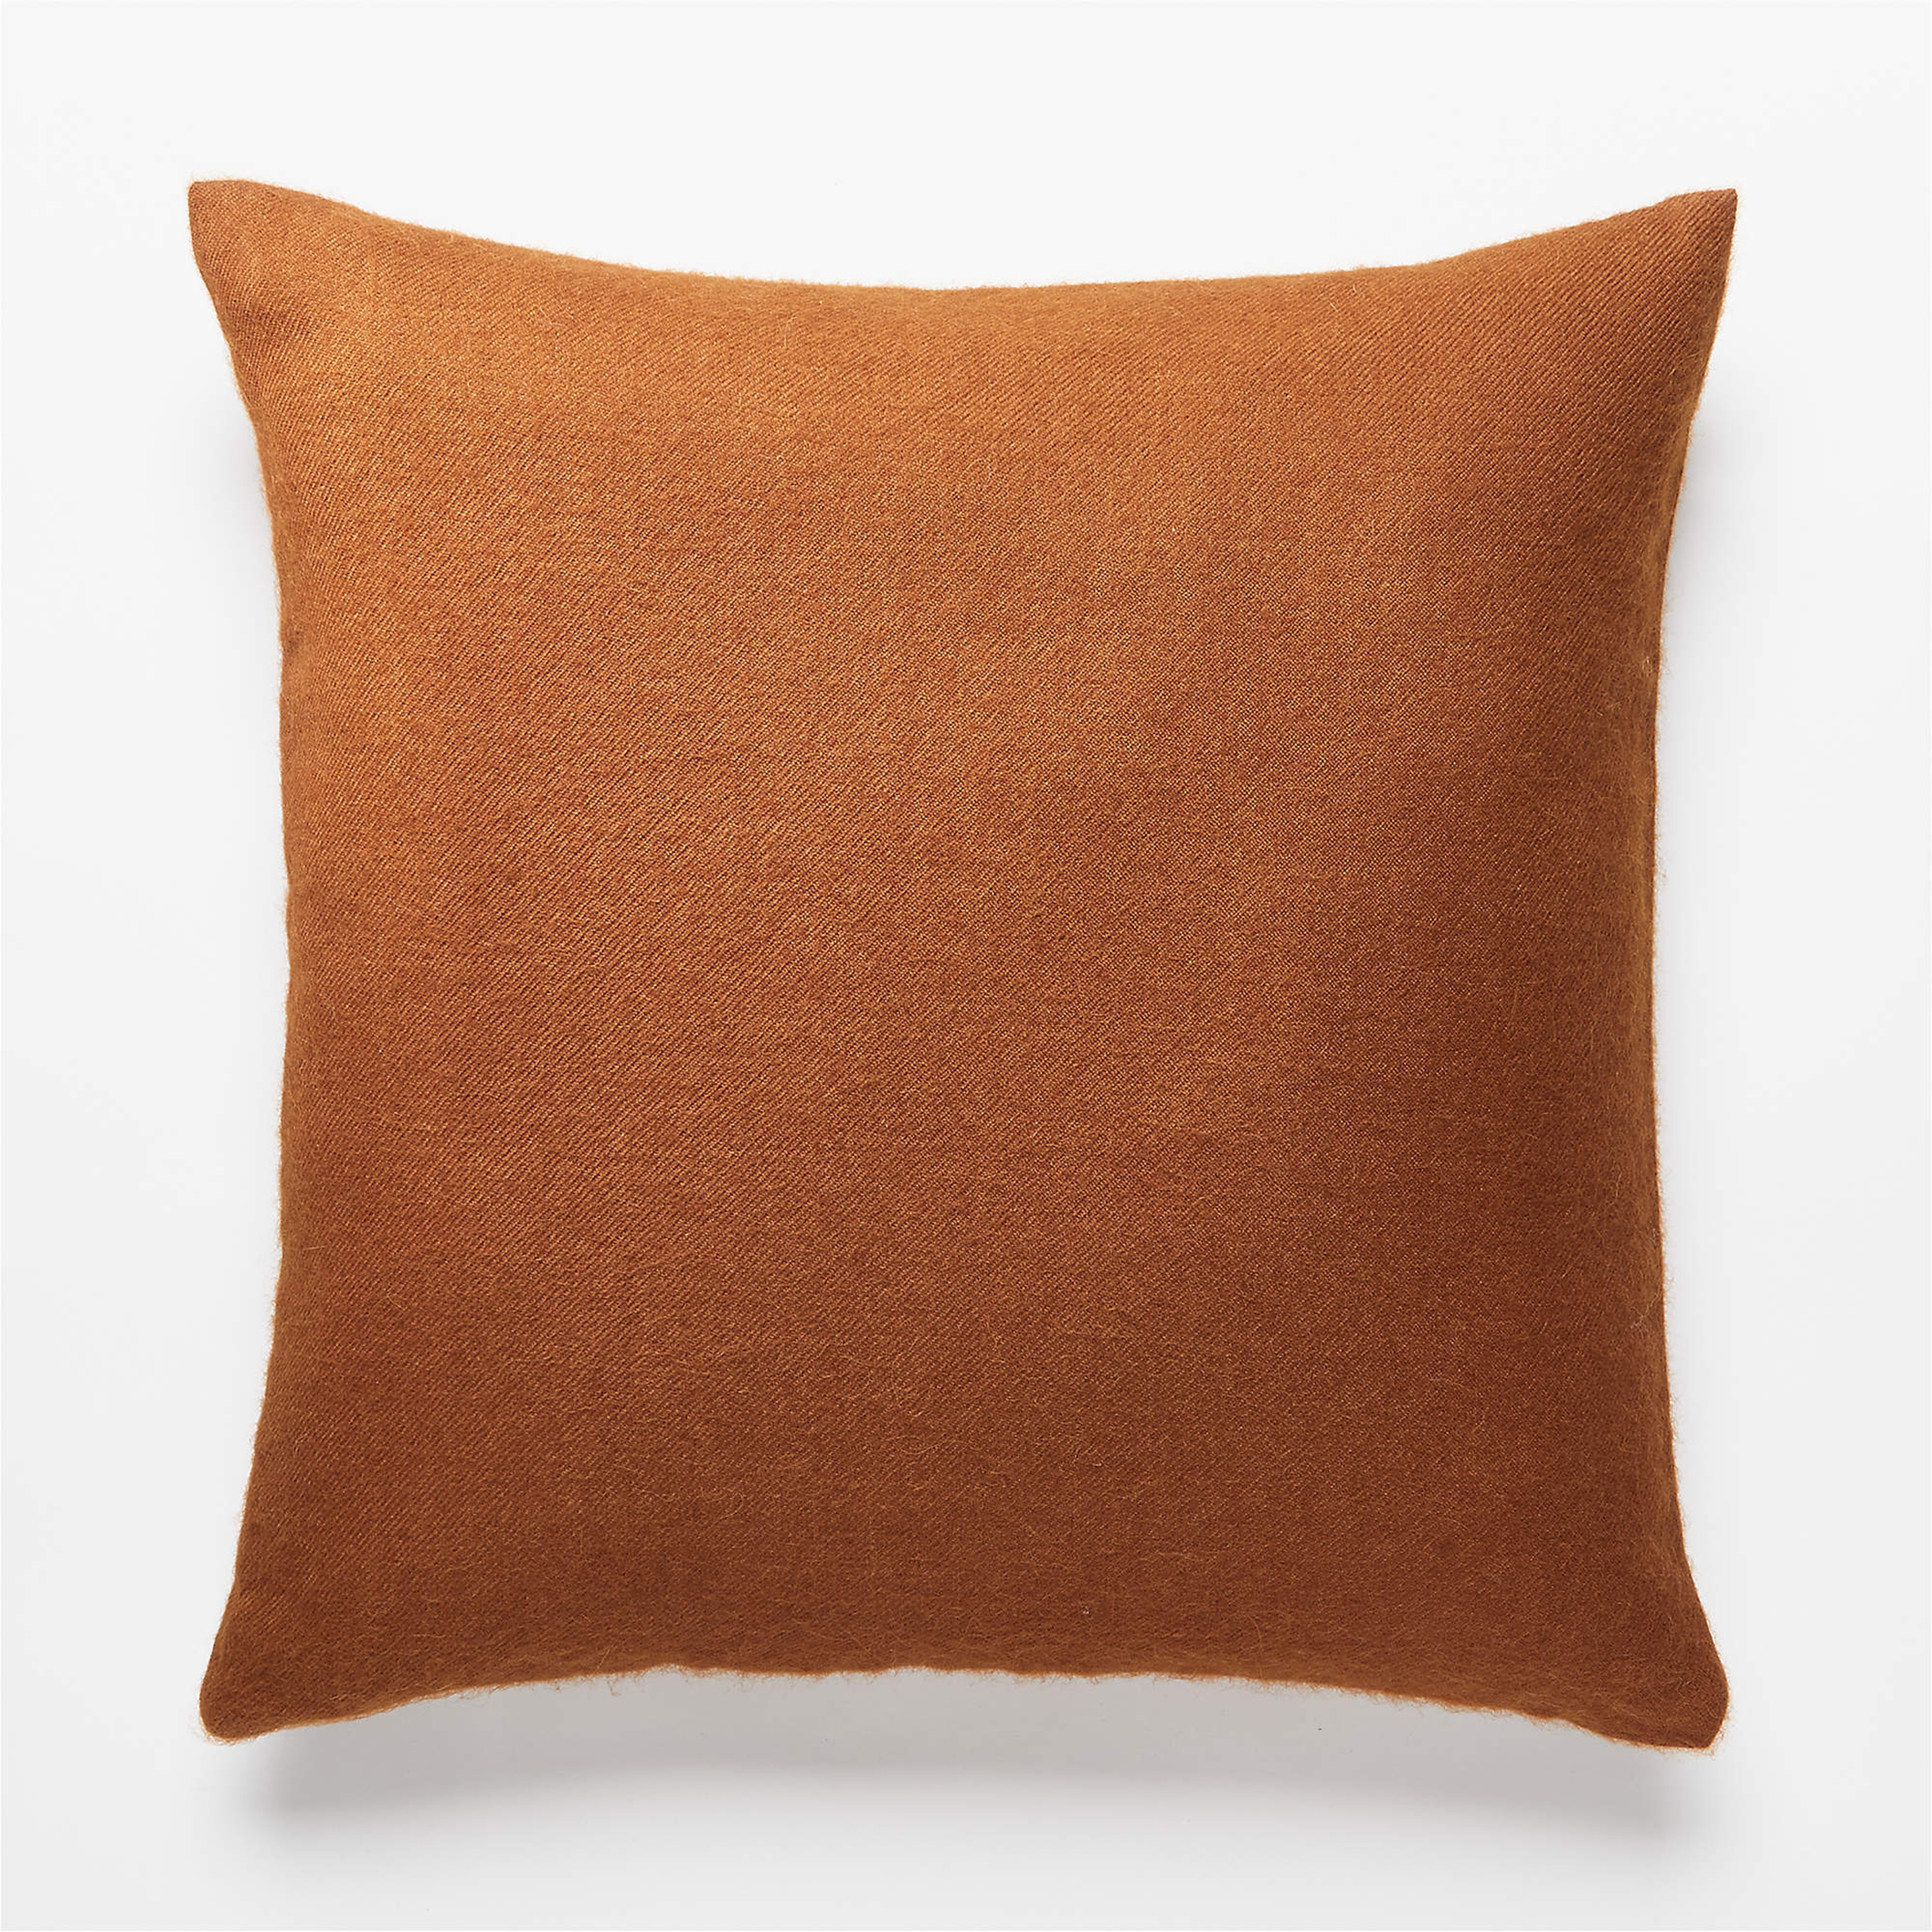 Alpaca Copper Pillow with Down-Alternative Insert, 20" x 20" - CB2